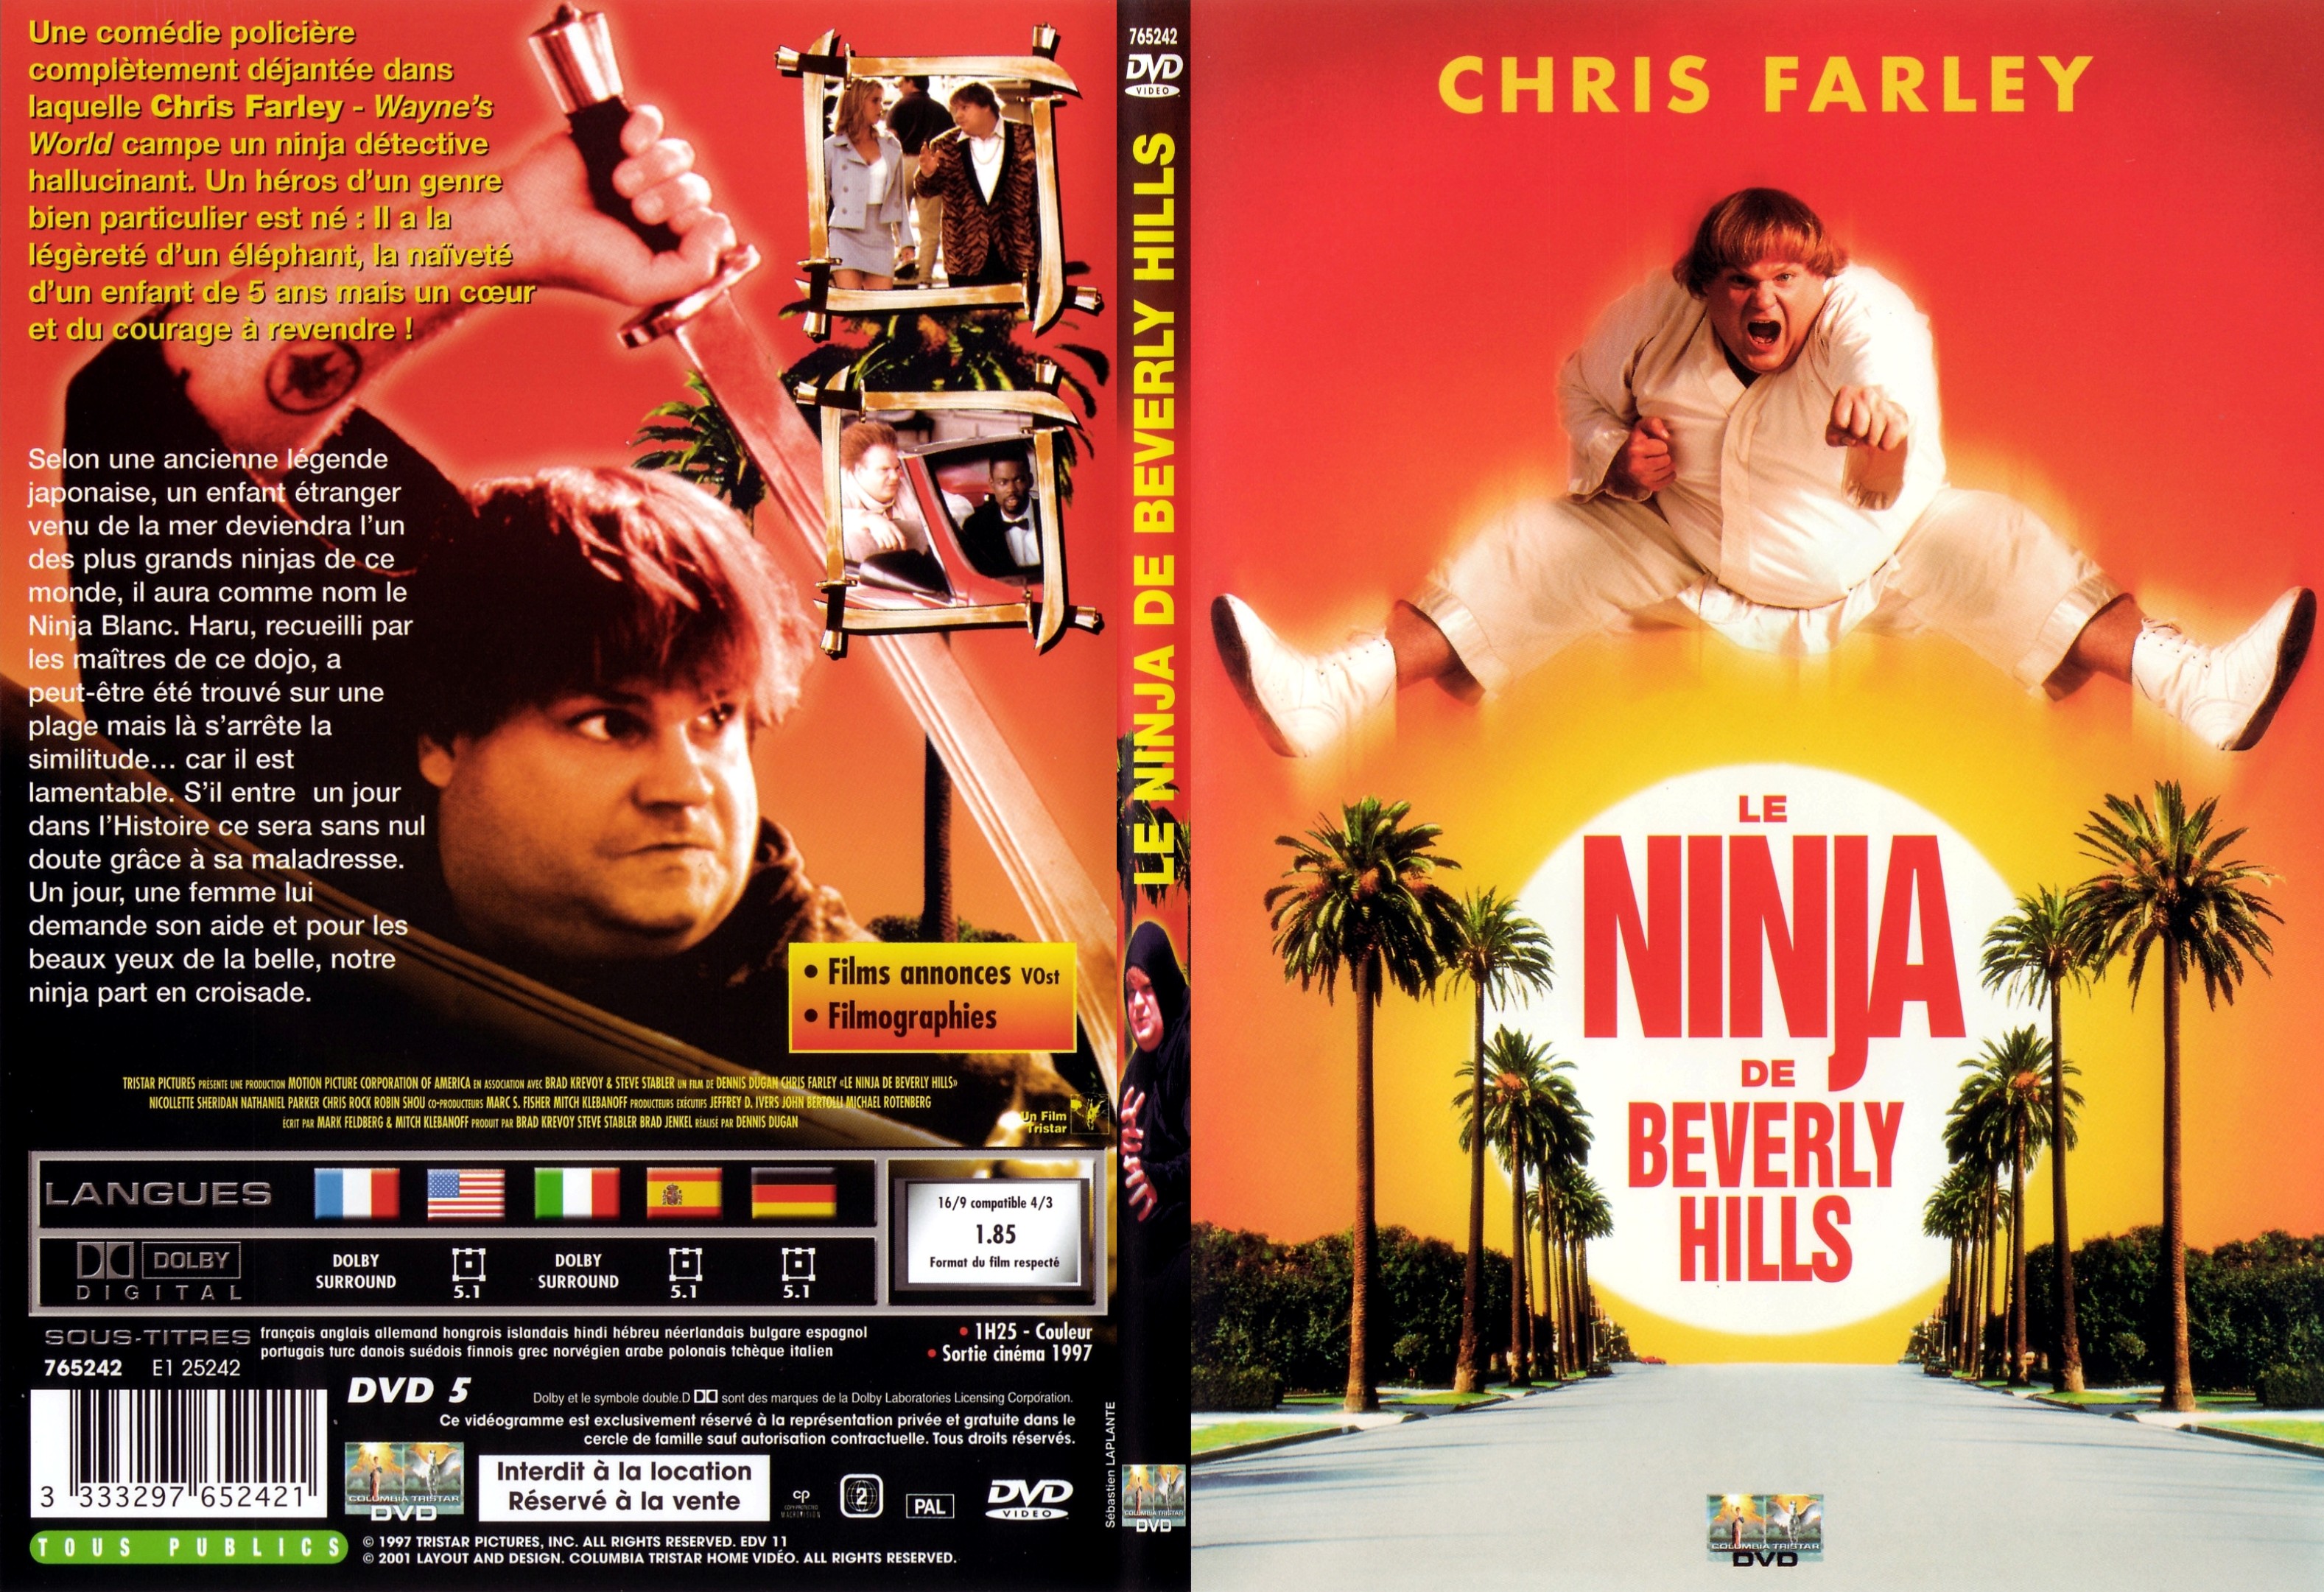 Jaquette DVD Le ninja de Beverly Hills - SLIM